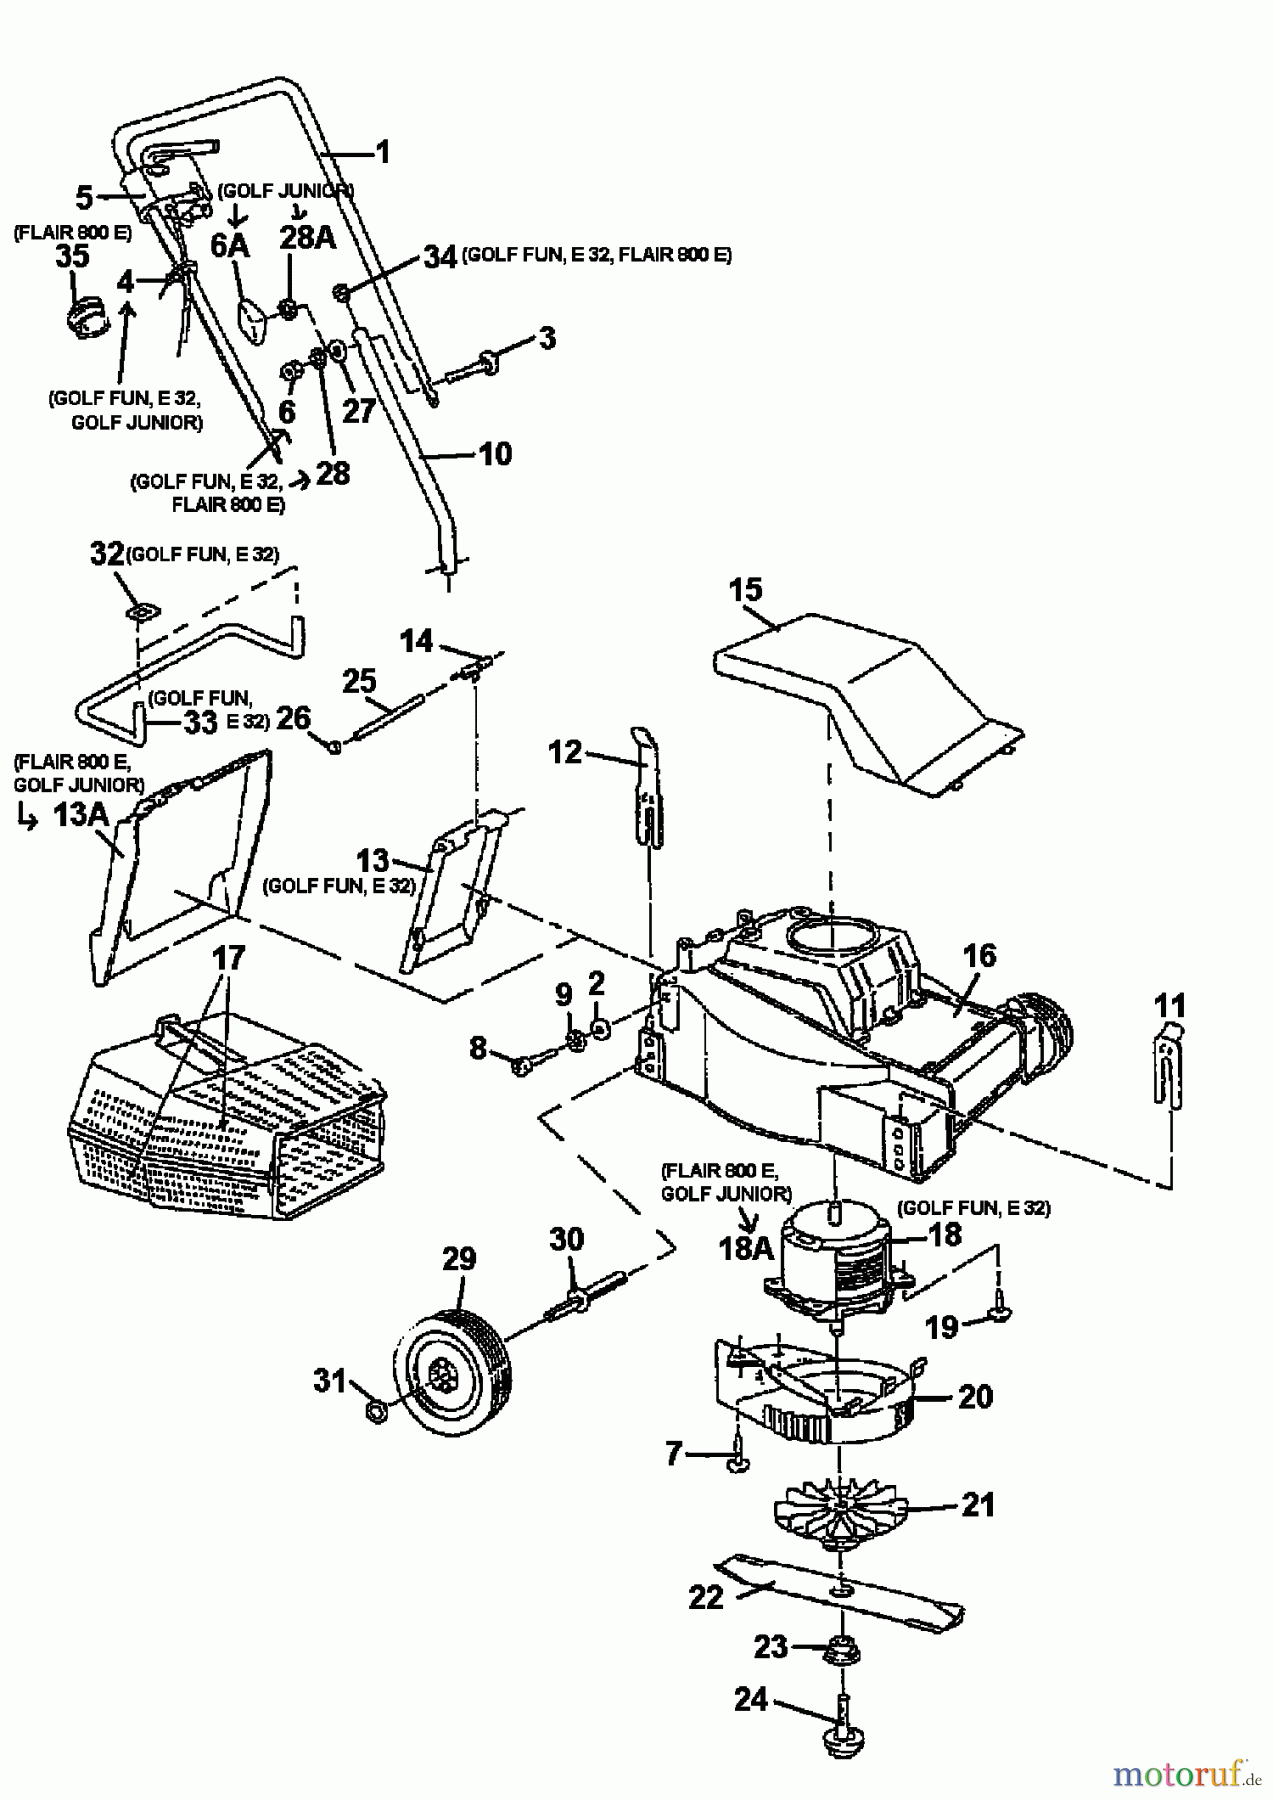  Golf Electric mower Junior 02819.09  (1997) Basic machine